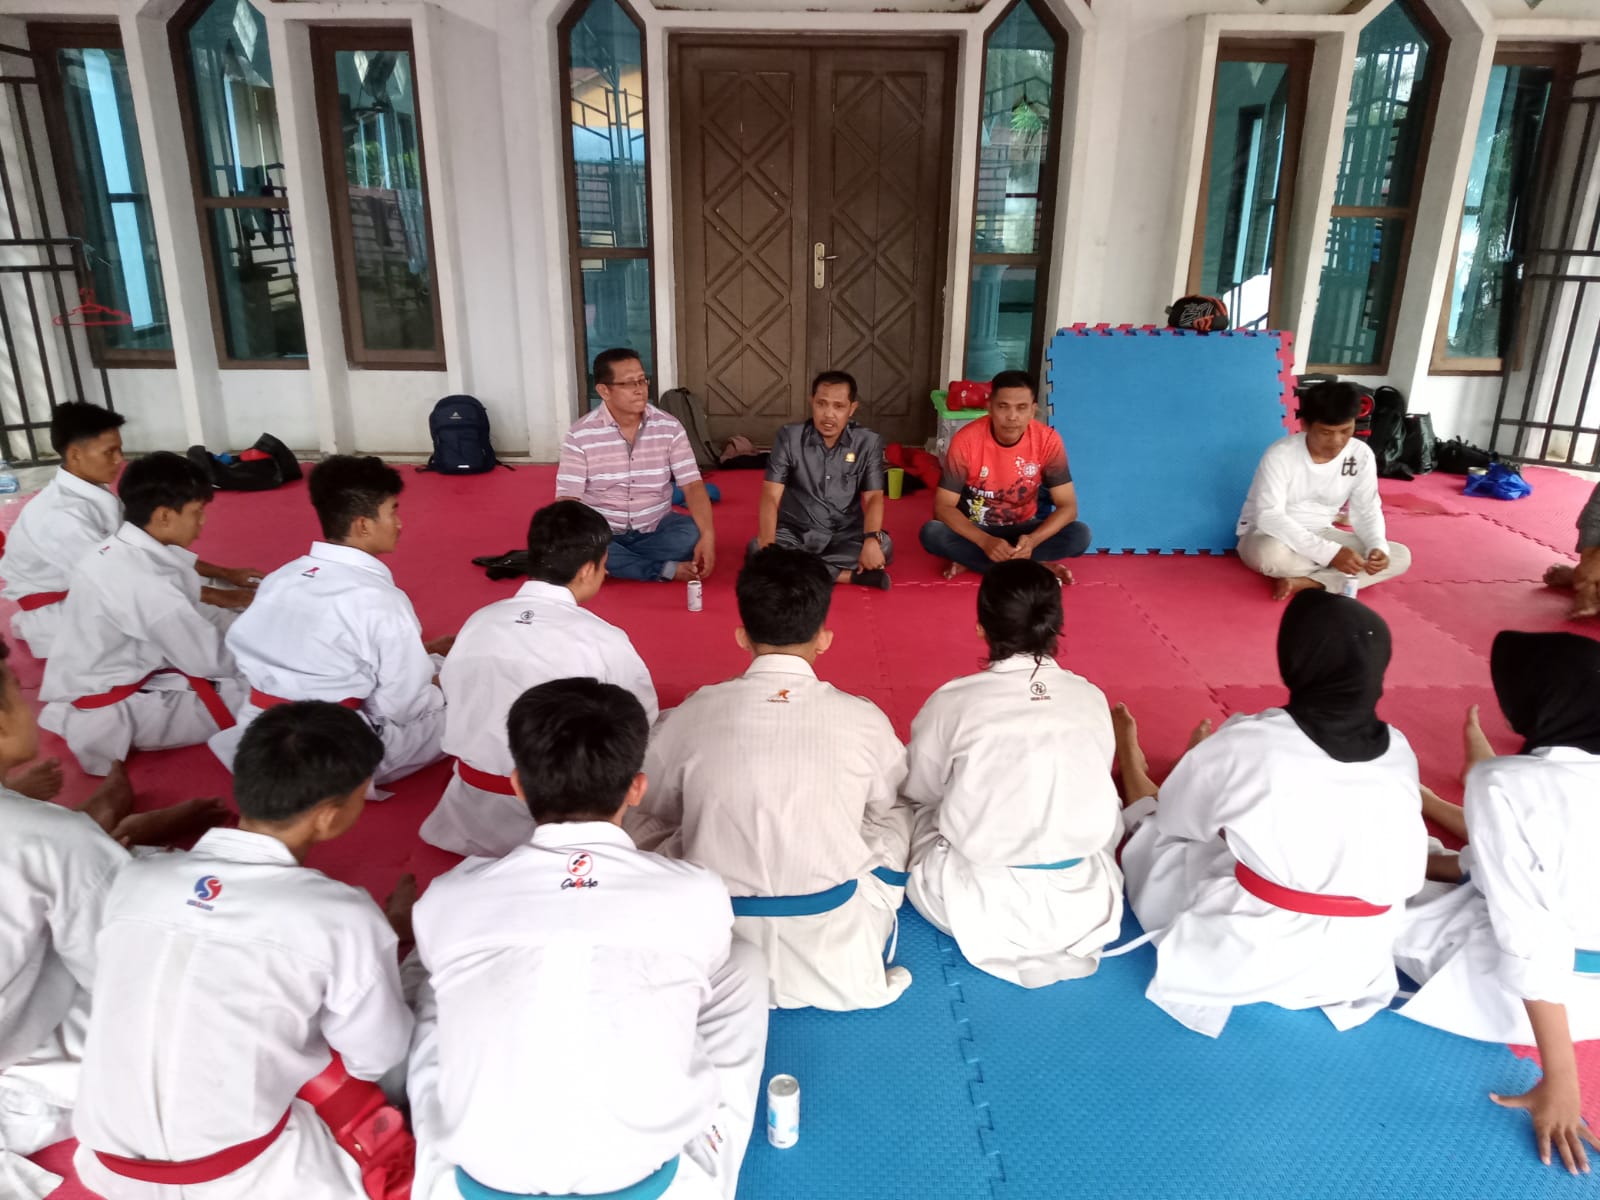 Ketua Forki Merangin, Saut Tua Samosir bersama para Atlit Karate-Do dan pelatih.